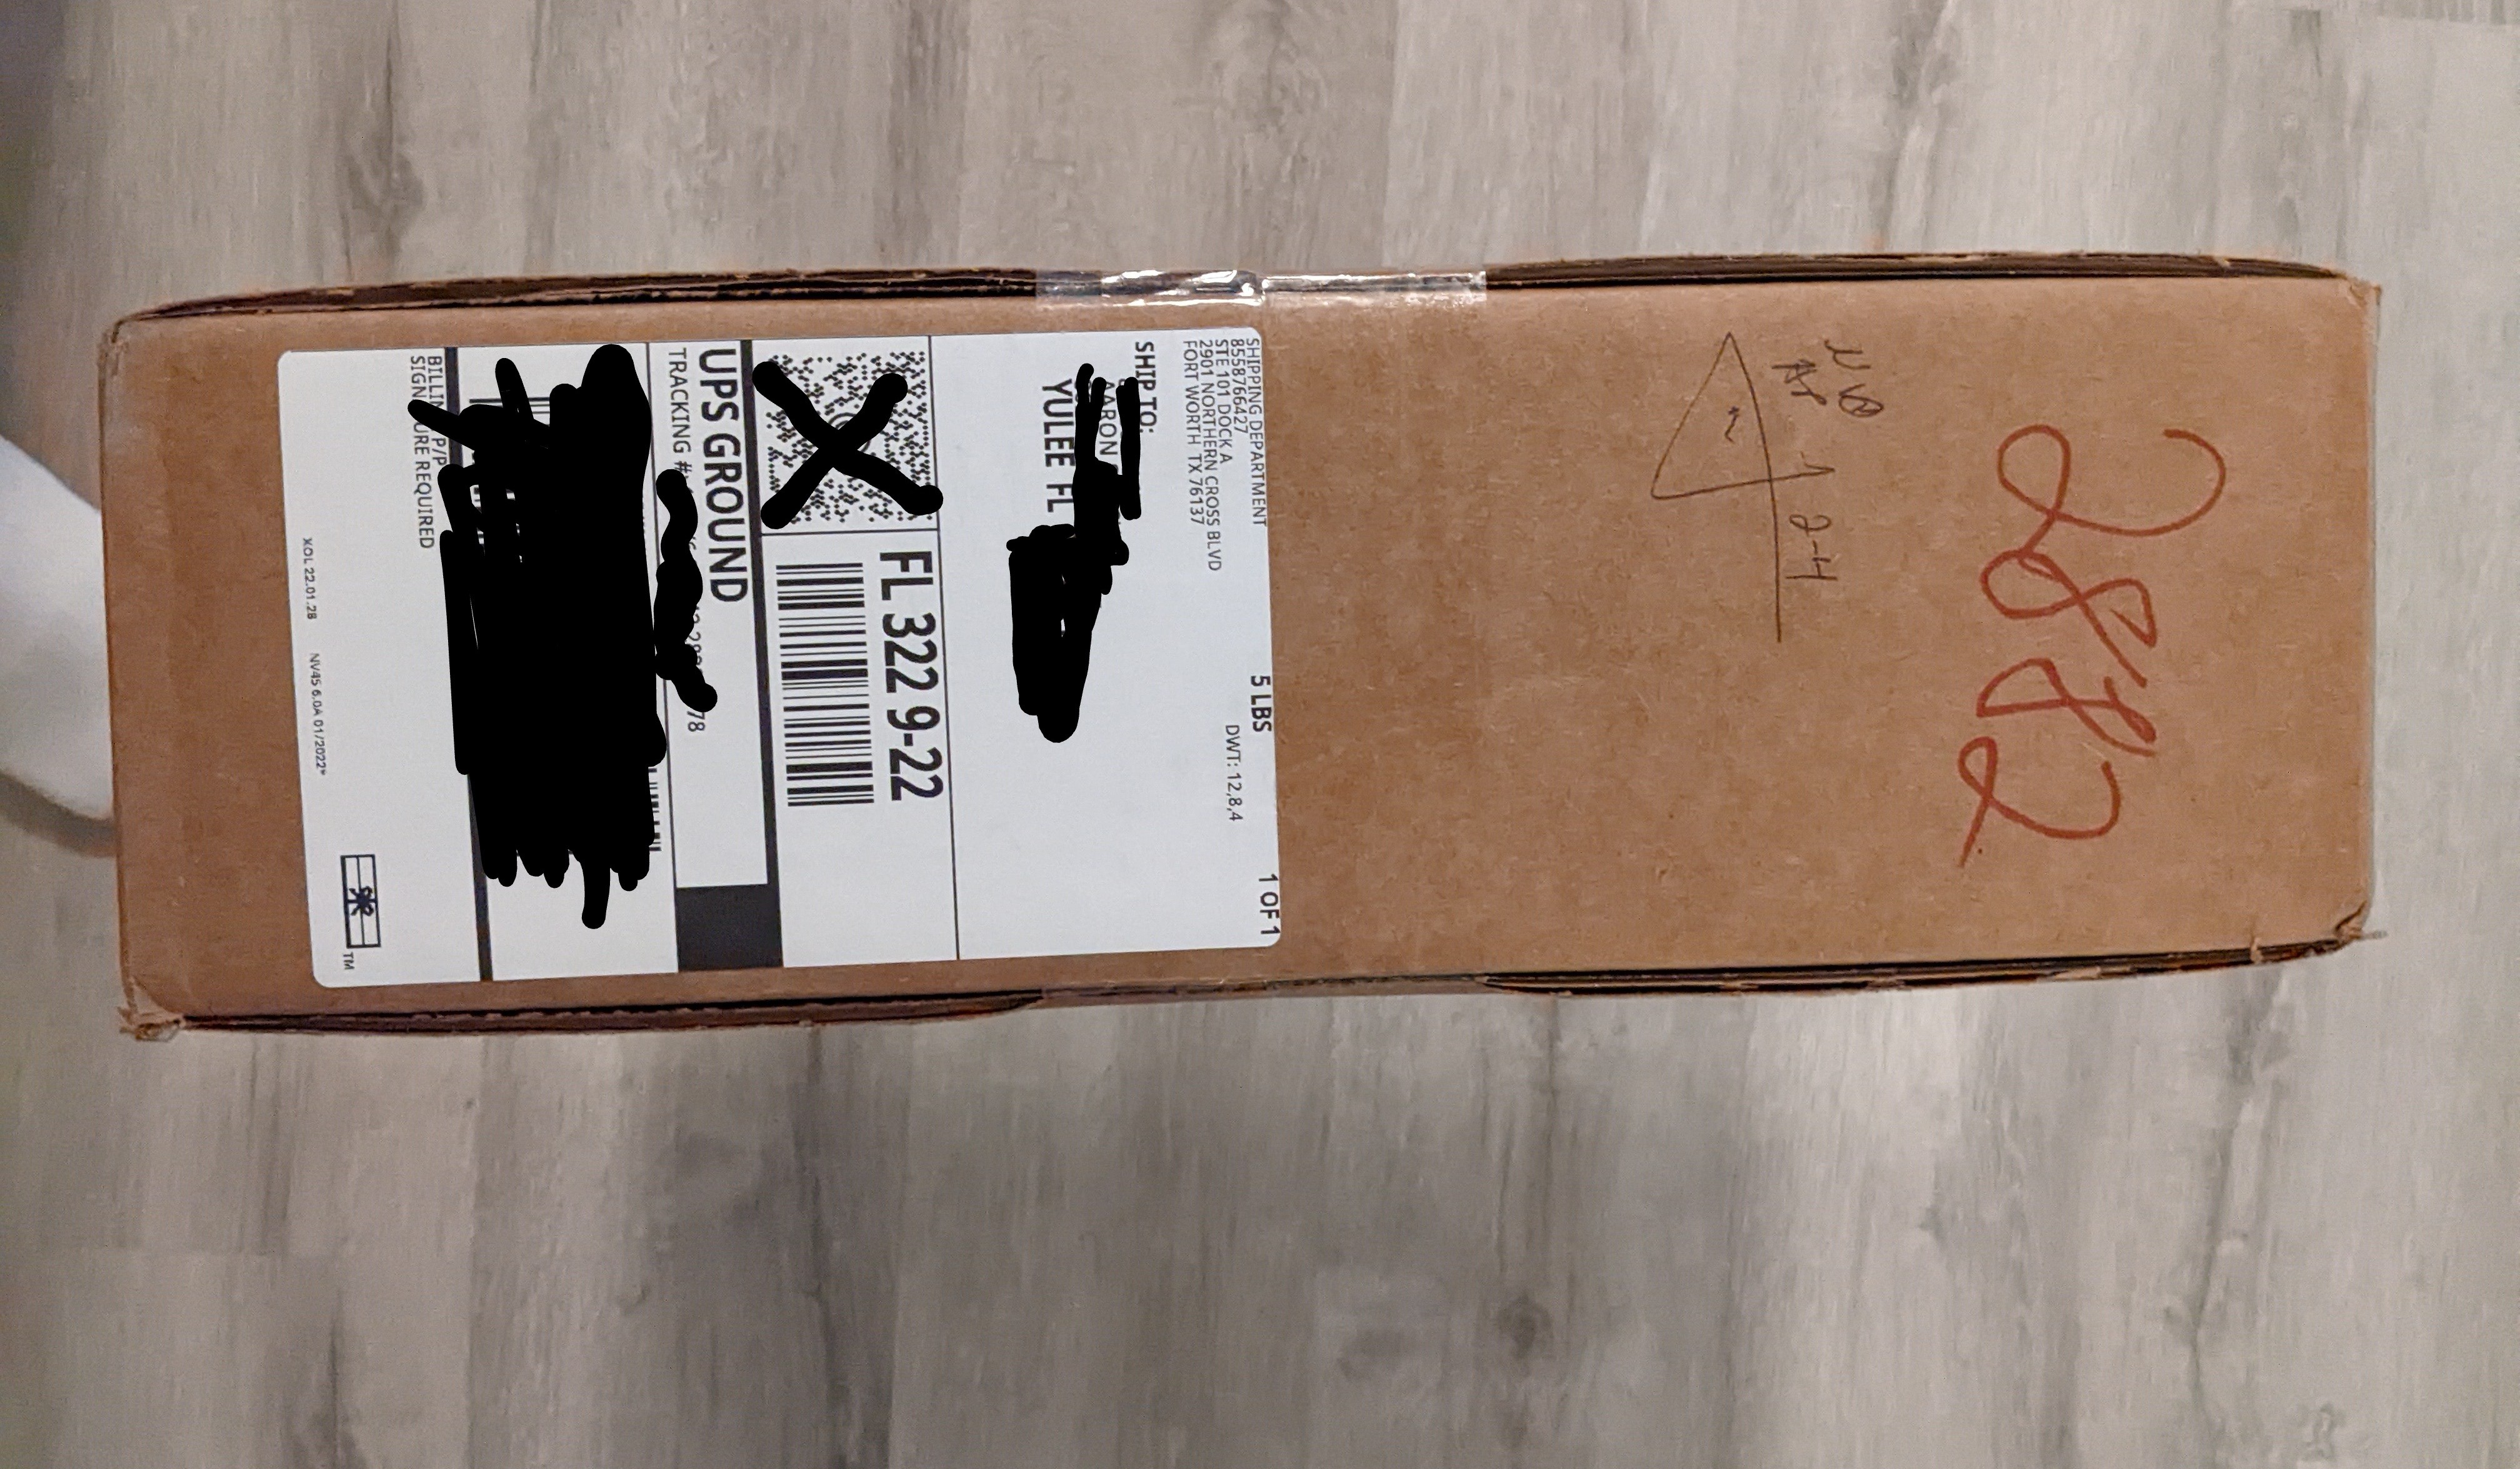 Unopened box, item returned this way